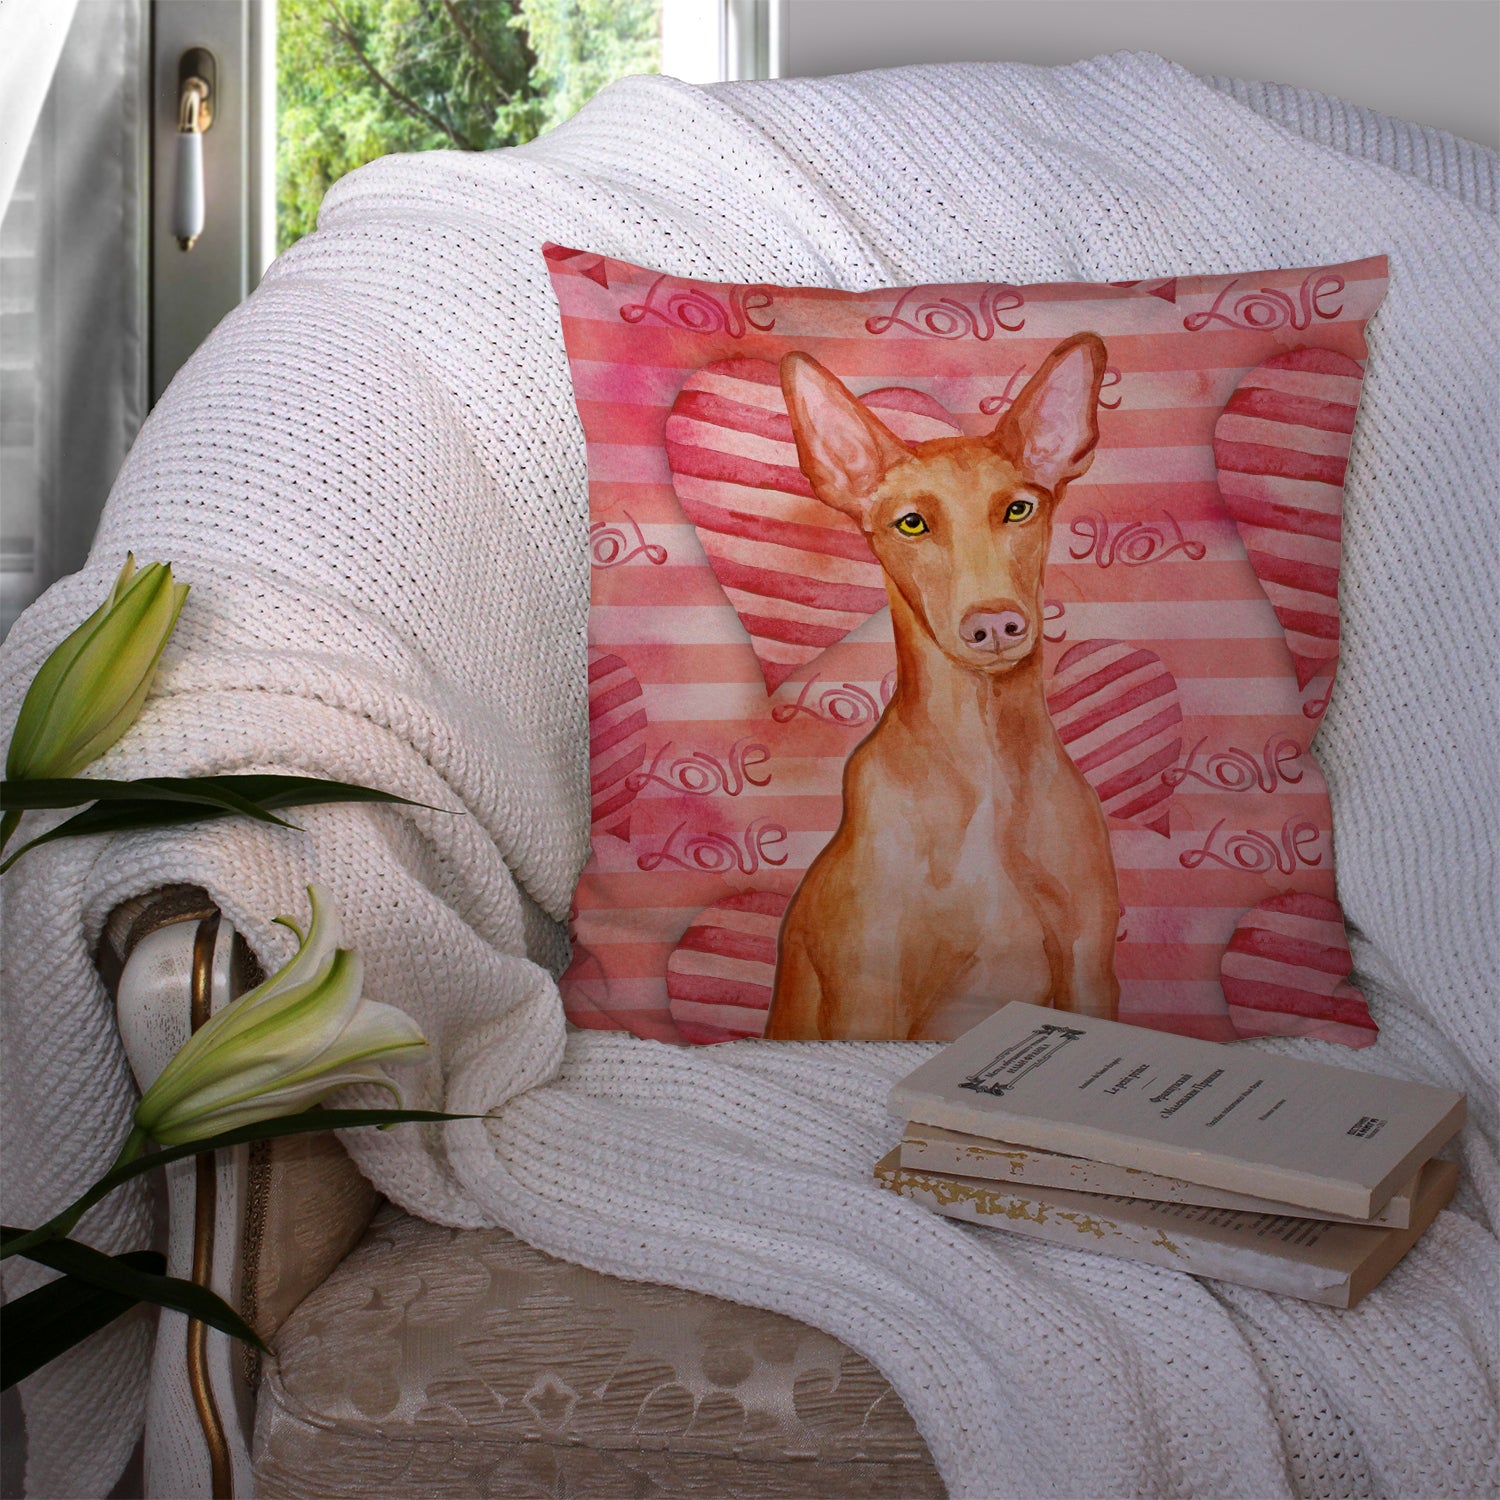 Pharaoh Hound Love Fabric Decorative Pillow BB9802PW1414 - the-store.com